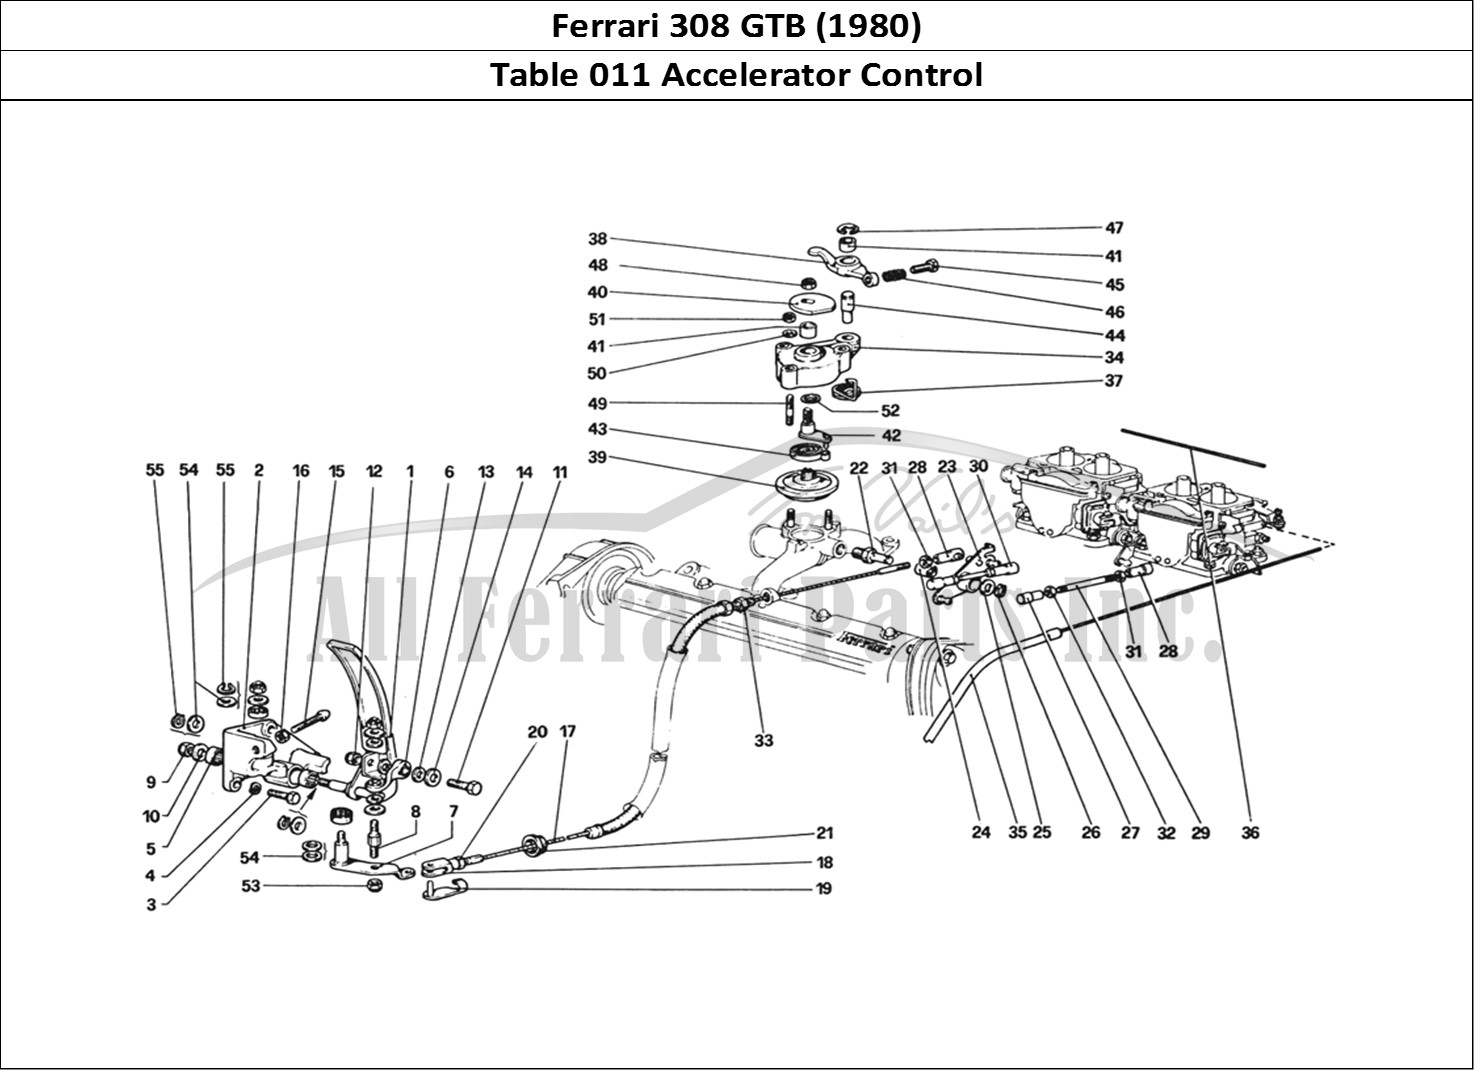 Ferrari Parts Ferrari 308 GTB (1980) Page 011 Throttle Control